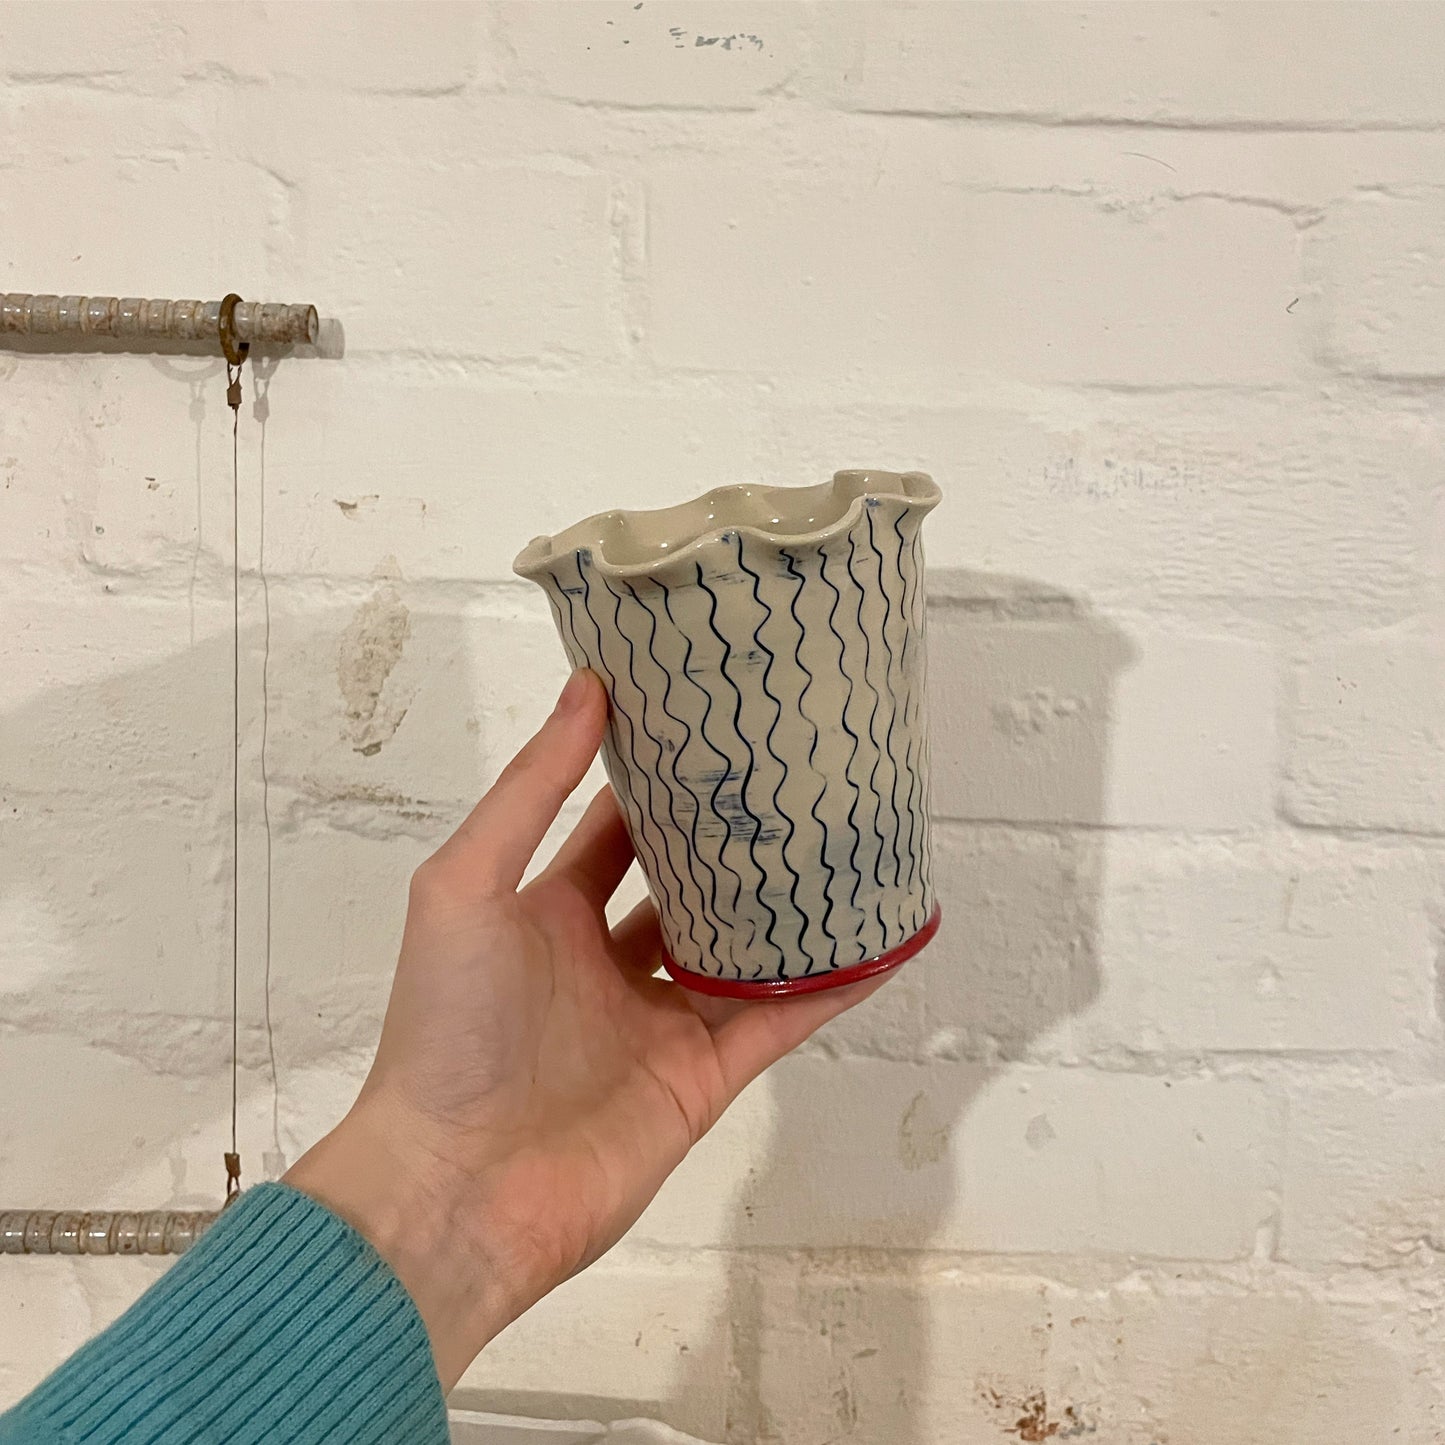 Cobalt Inlay Vase - Small